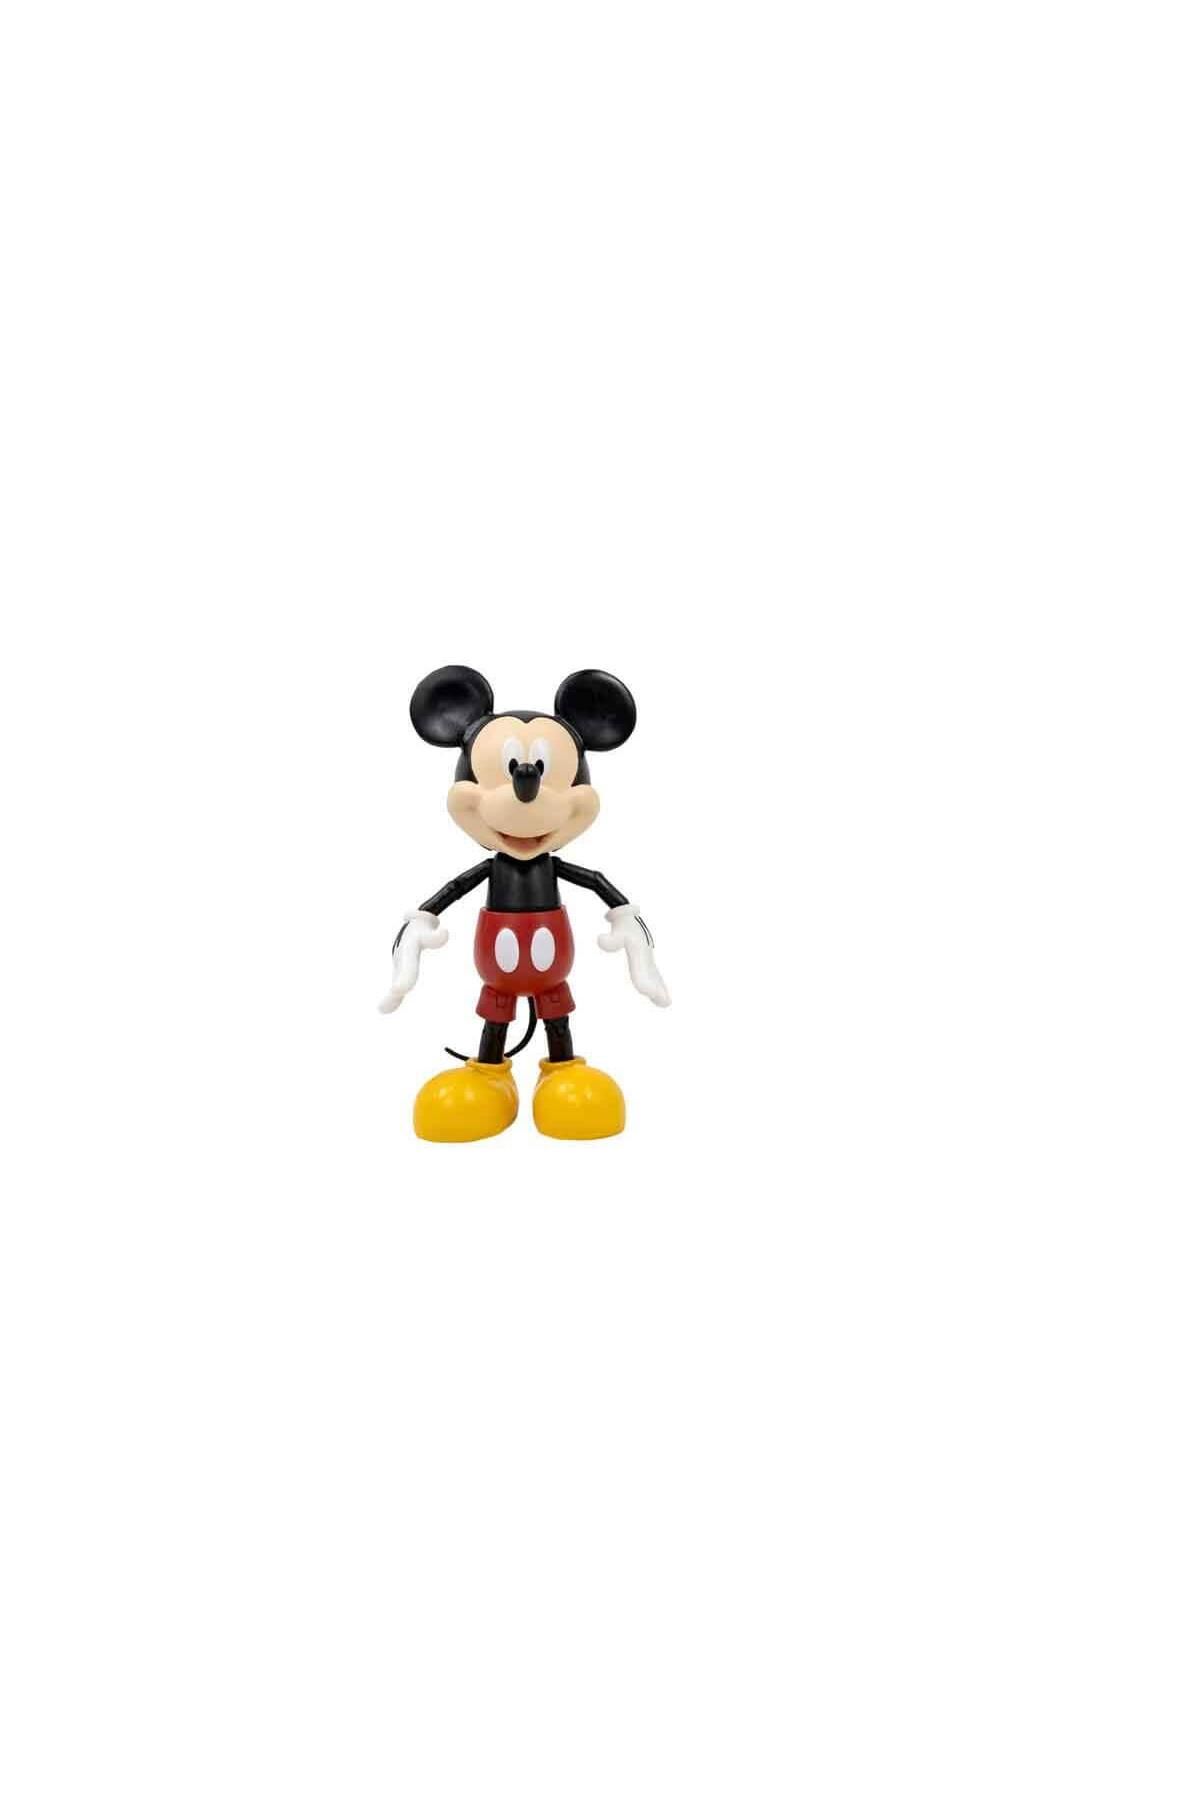 GIOCHI PREZIOSI Disney100 Koleksiyon Figürü Walt Disney World Mickey Mouse Figürü